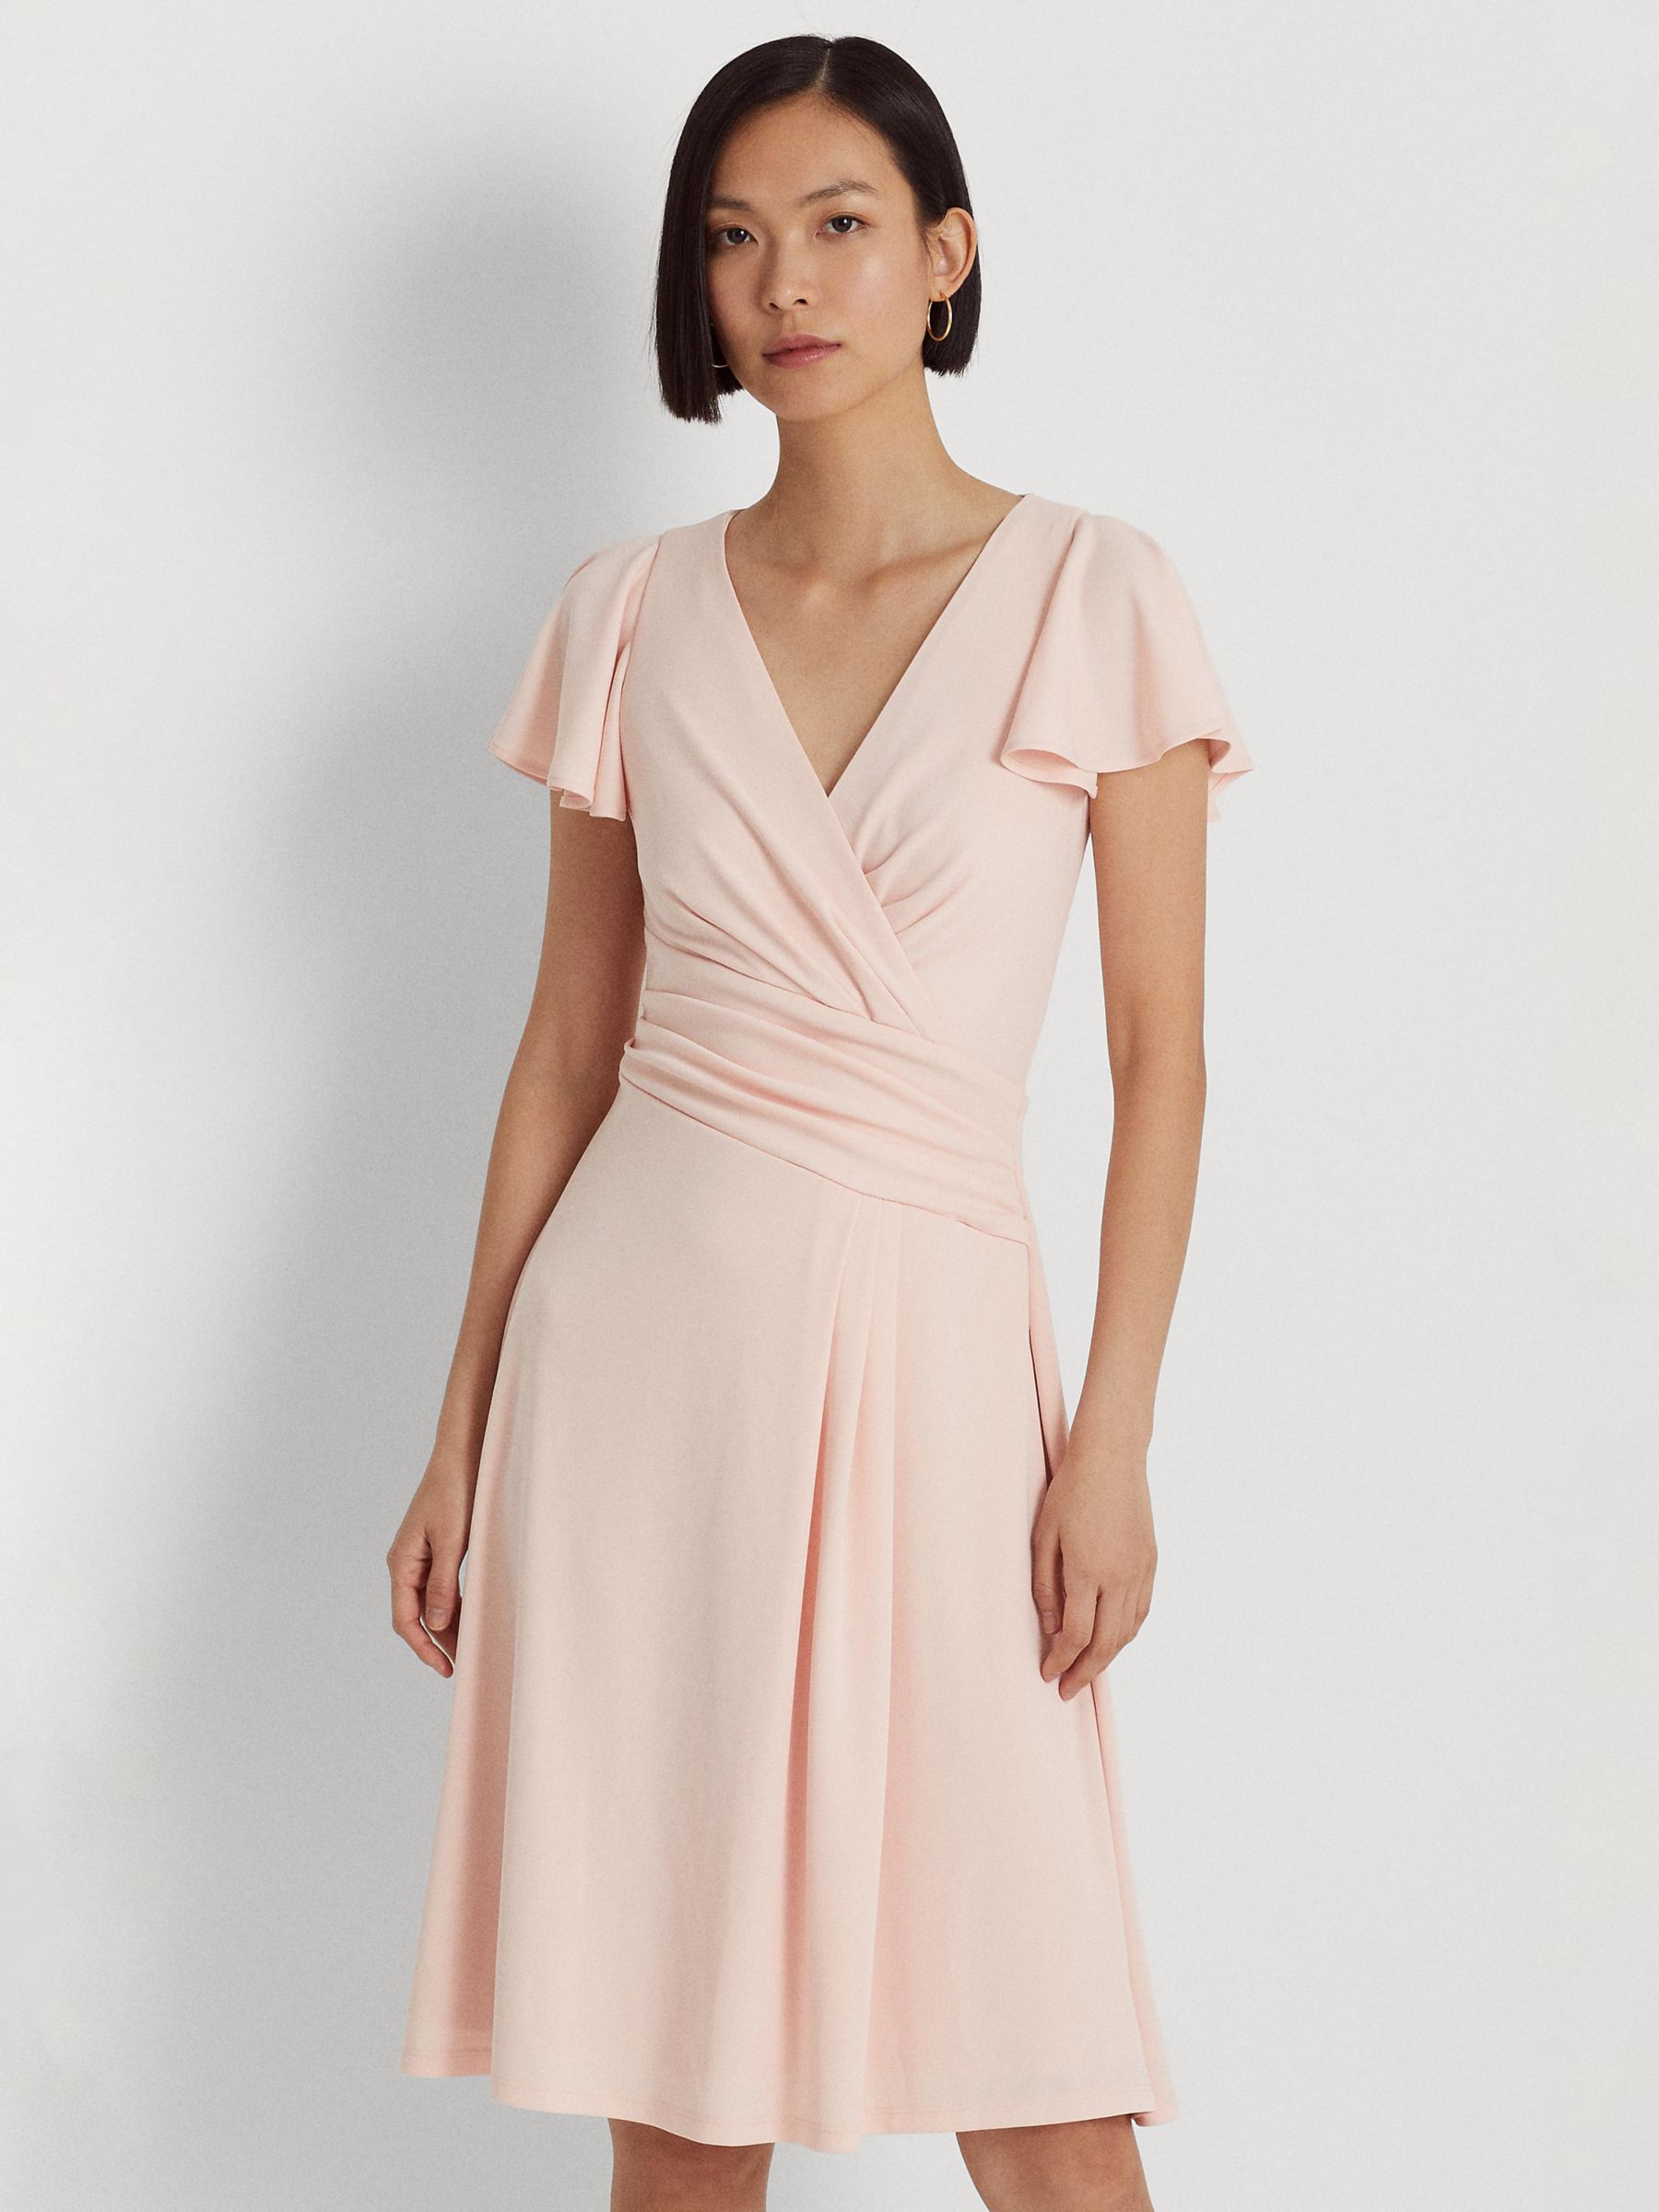 Lauren Ralph Lauren Besarry Plain Wrap Dress, Pale Pink